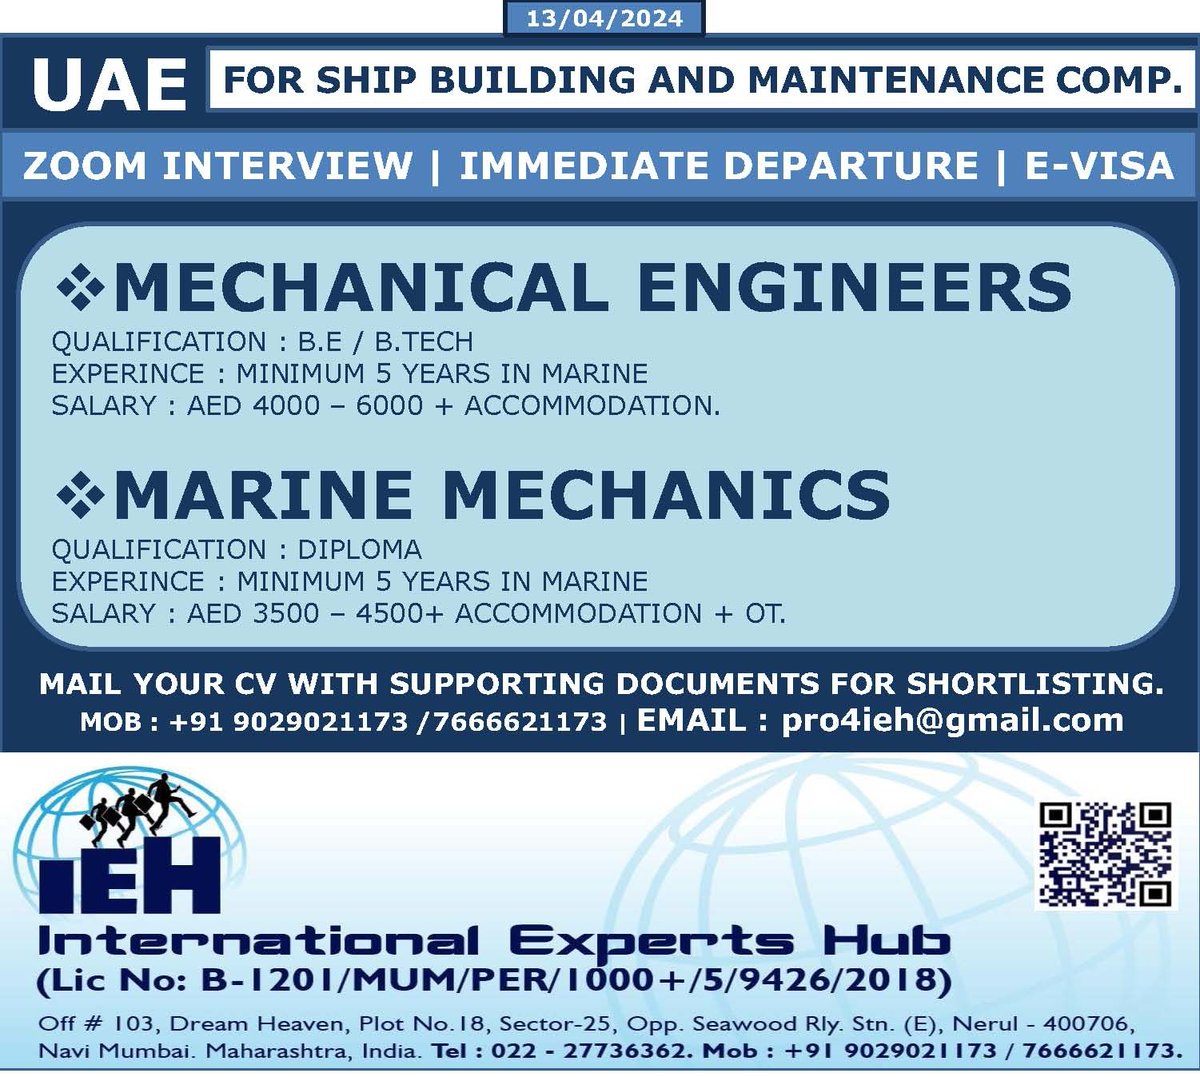 #UAEJobs #uaejobseekers #UAEJobSearch #UAEJobOpportunities #uaejobs2024 #abroadjobs #abroadVacancy #abroadcareer #gulfjobs #gulfjobseekers #gulfjobcareers #mechanicalengineers #marinemechanics #marine